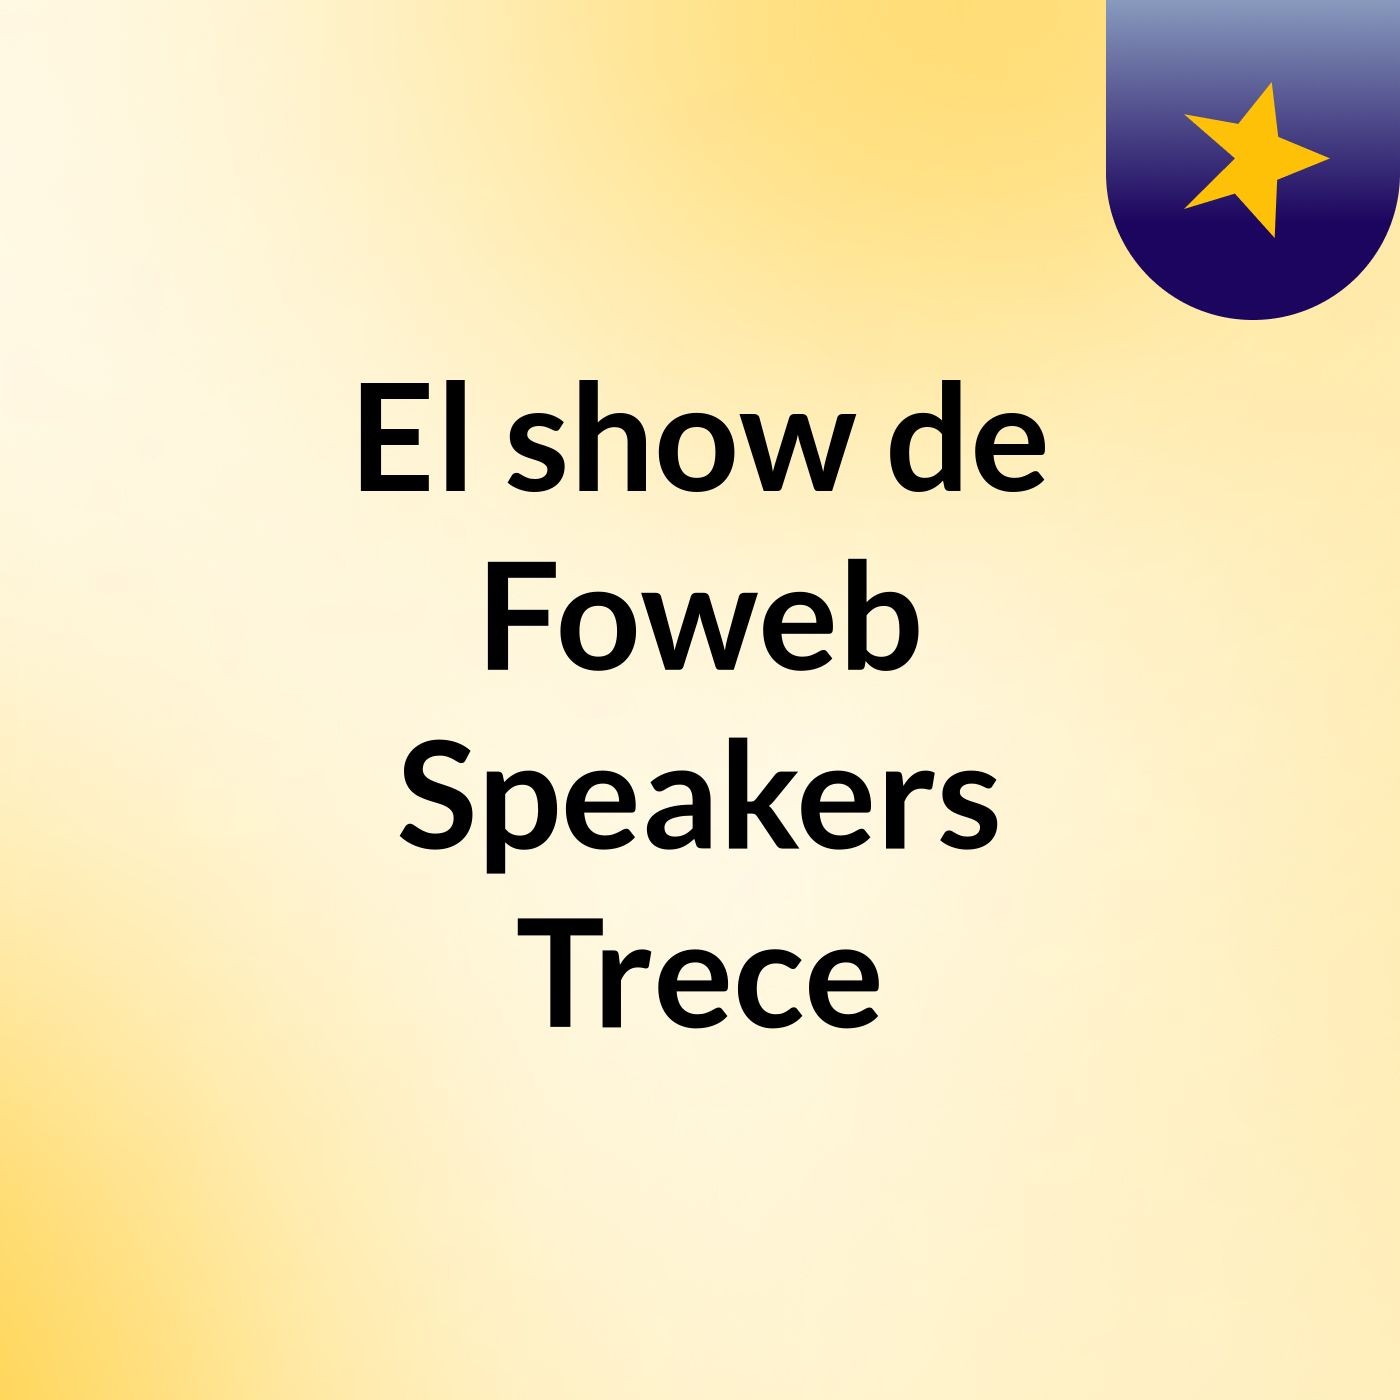 El show de Foweb Speakers Trece